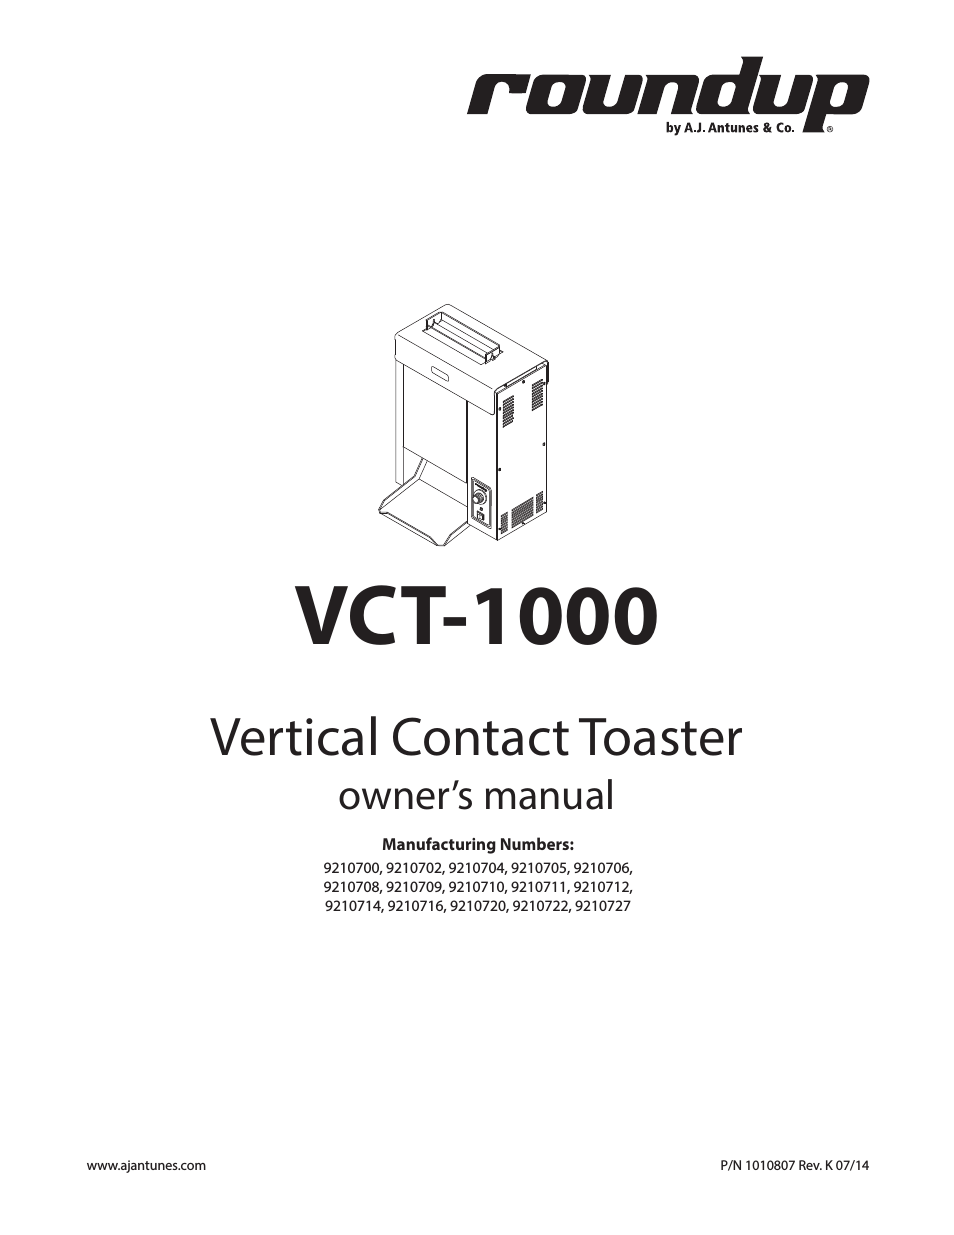 VCT-1000 9210722